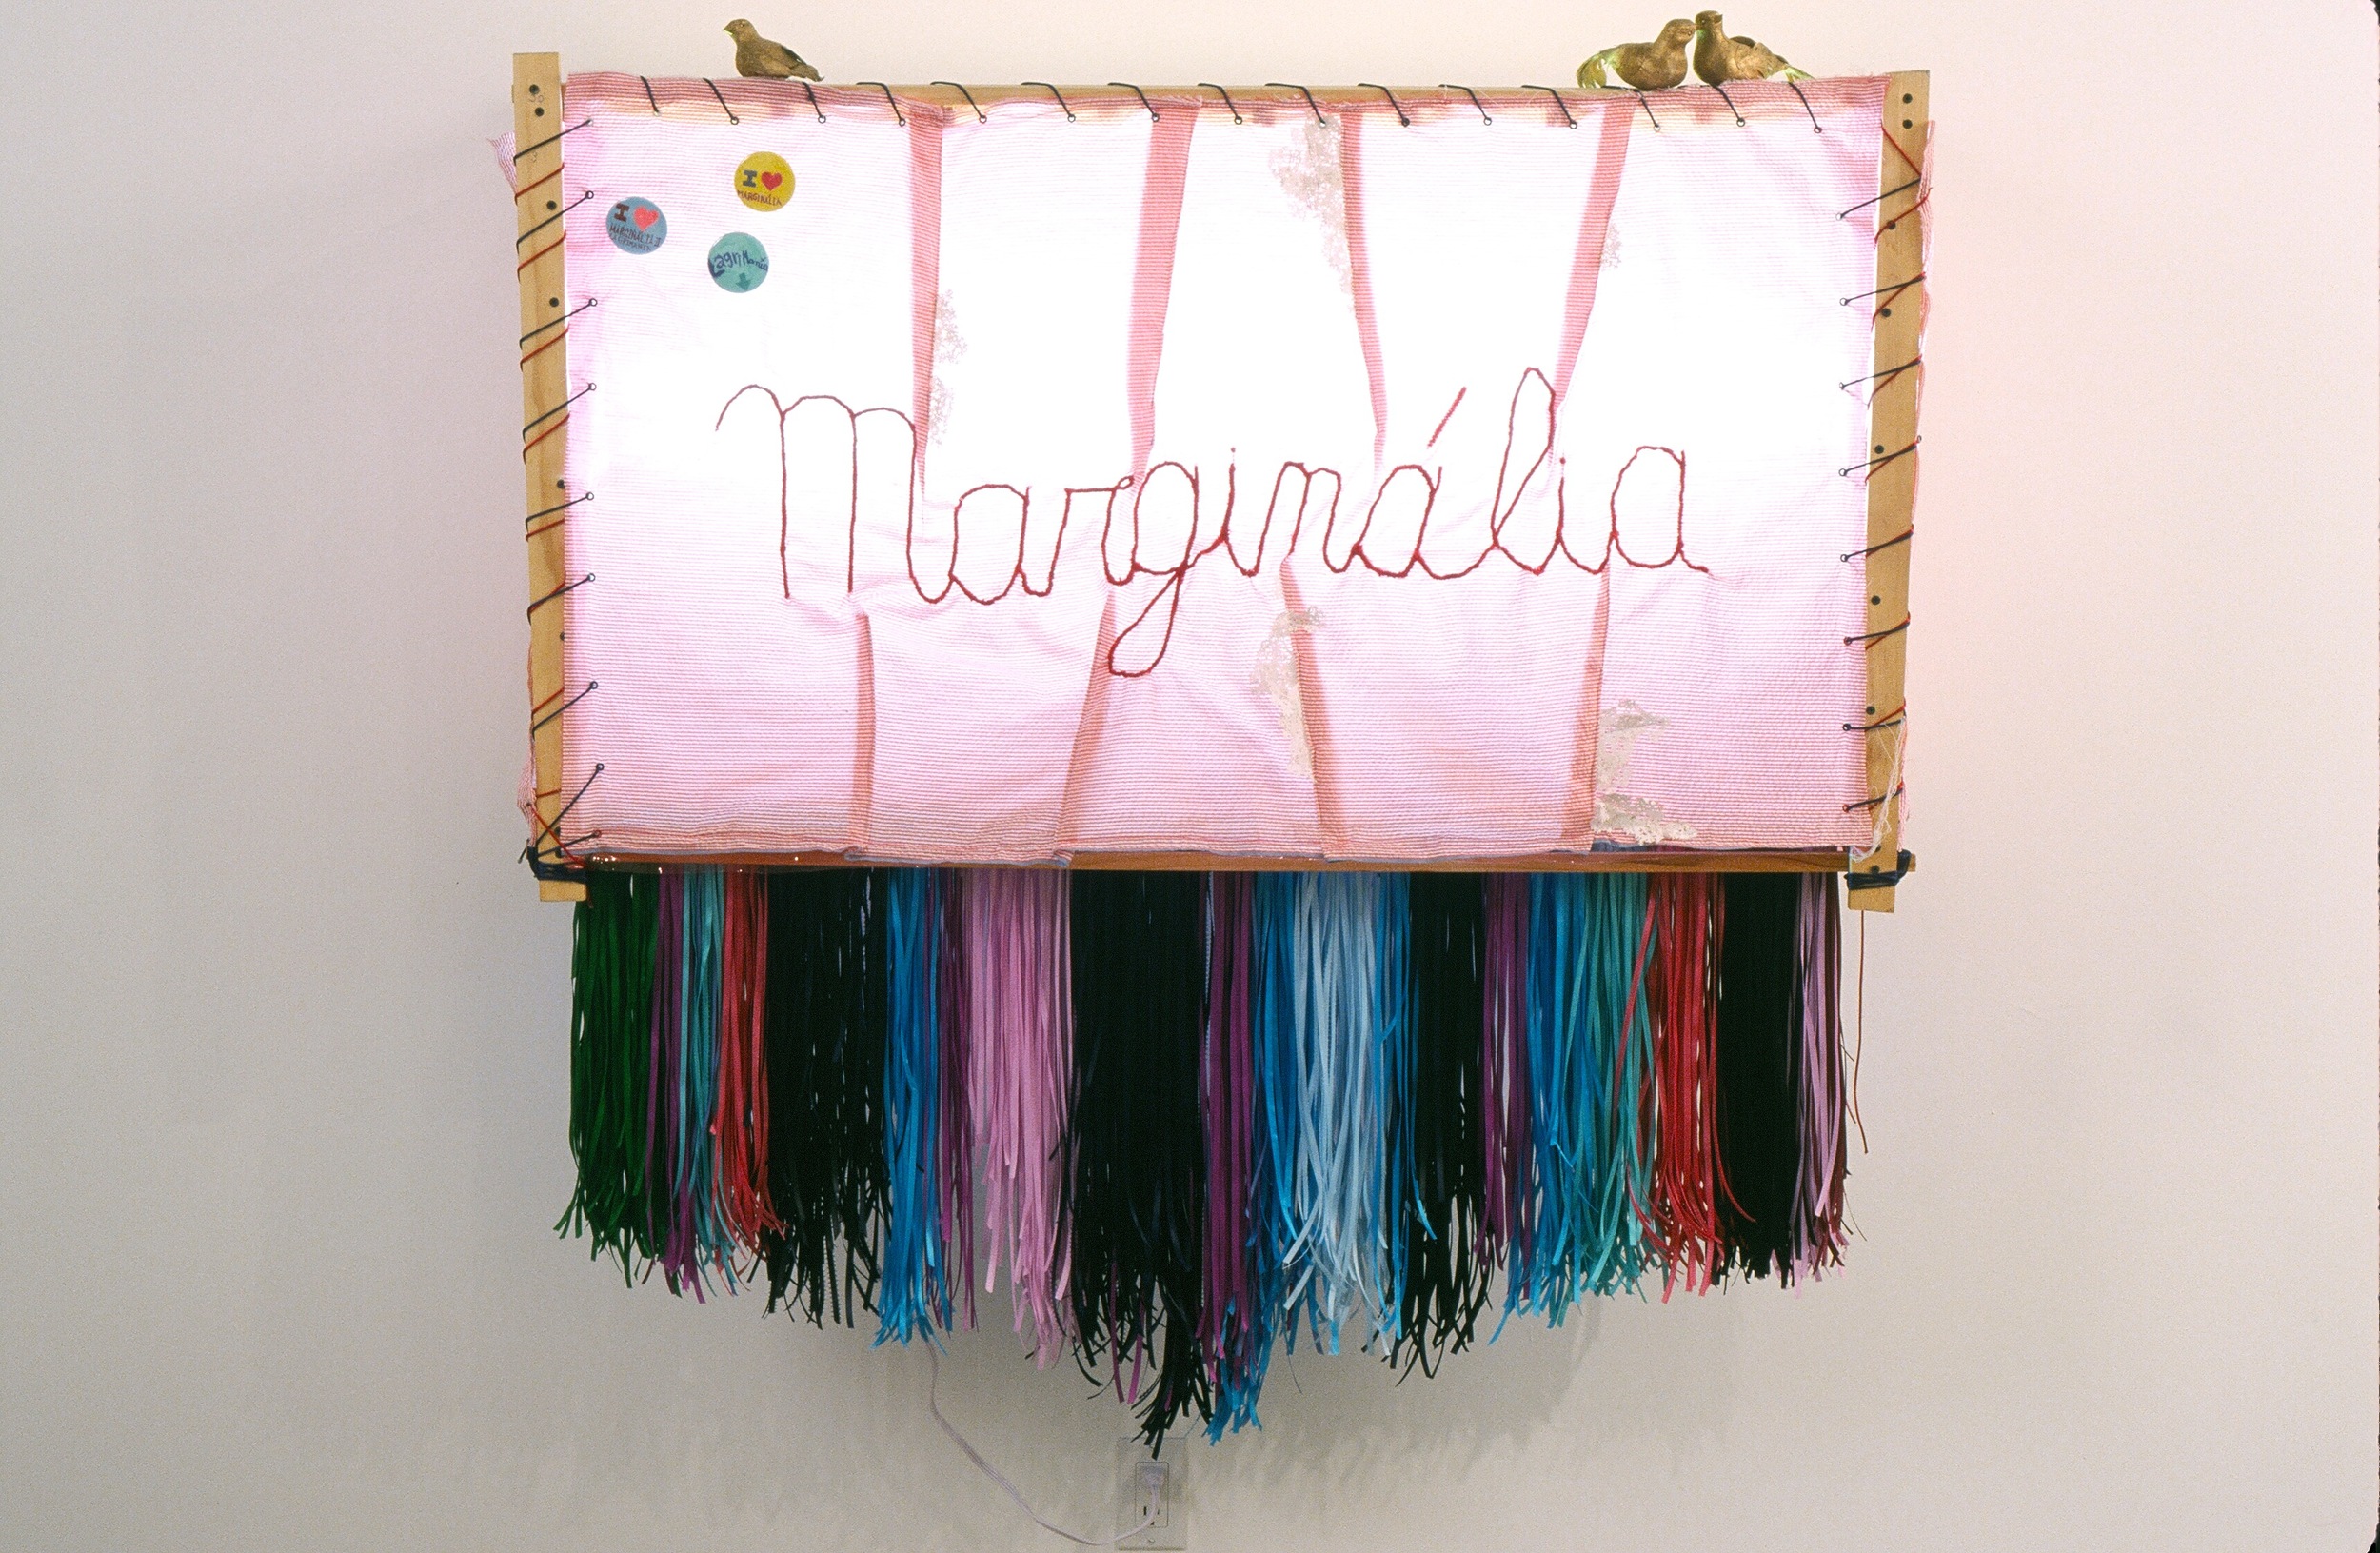   I Love Marginália , 2004  fabric, wood, mesh wire, ribbons, styrofoam, buttons, paint, light, vinyl, metal, paper   74 X 18 X 50 / 188 X 45.5 x 127Cm     